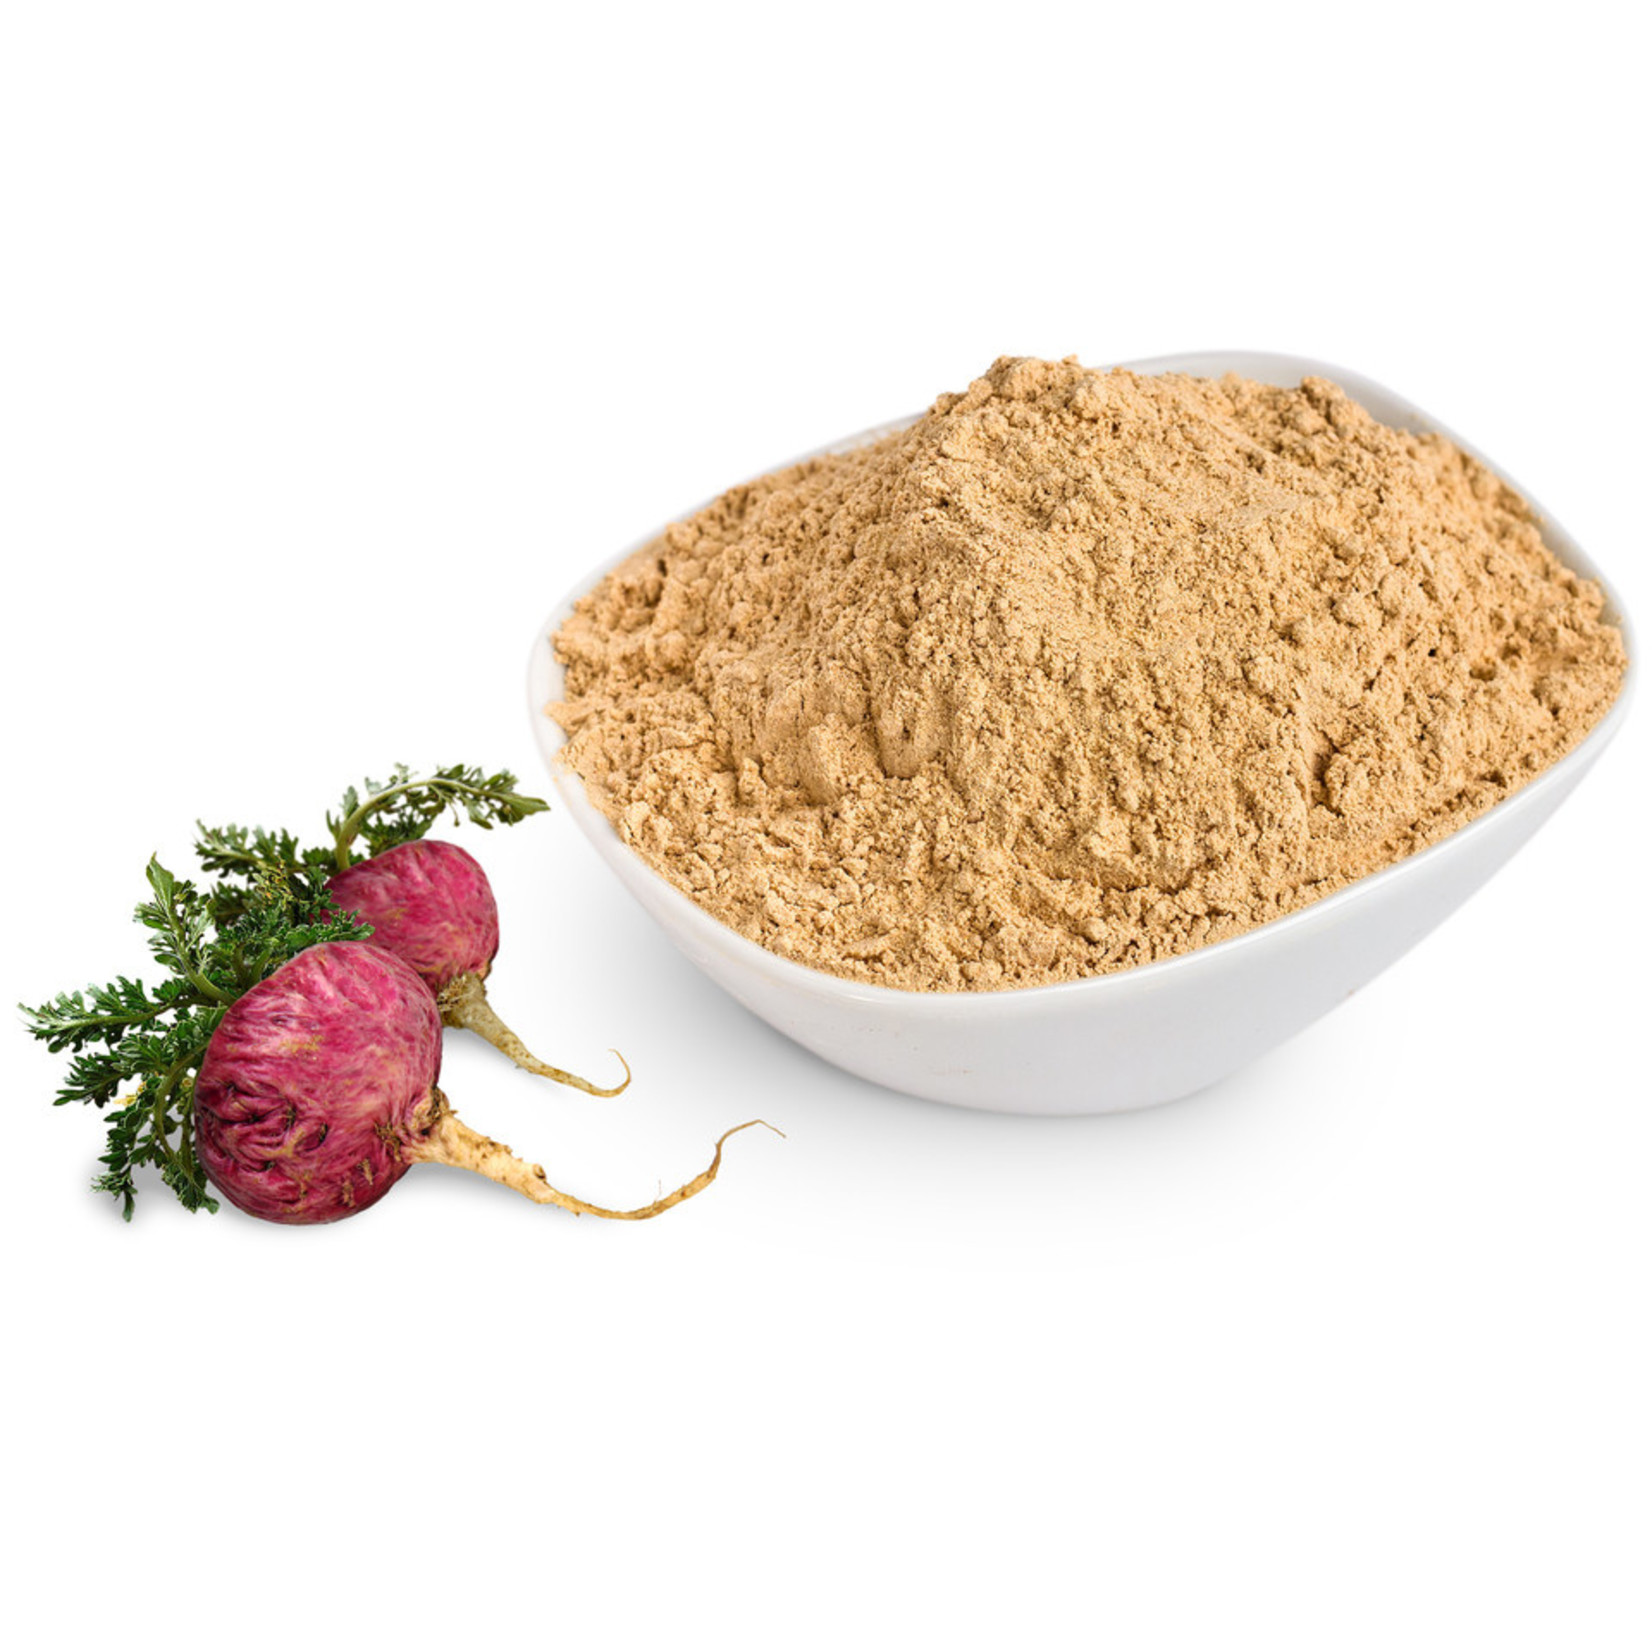 Sunfood Sunfood - Raw Organic Red Maca Powder - 8 oz